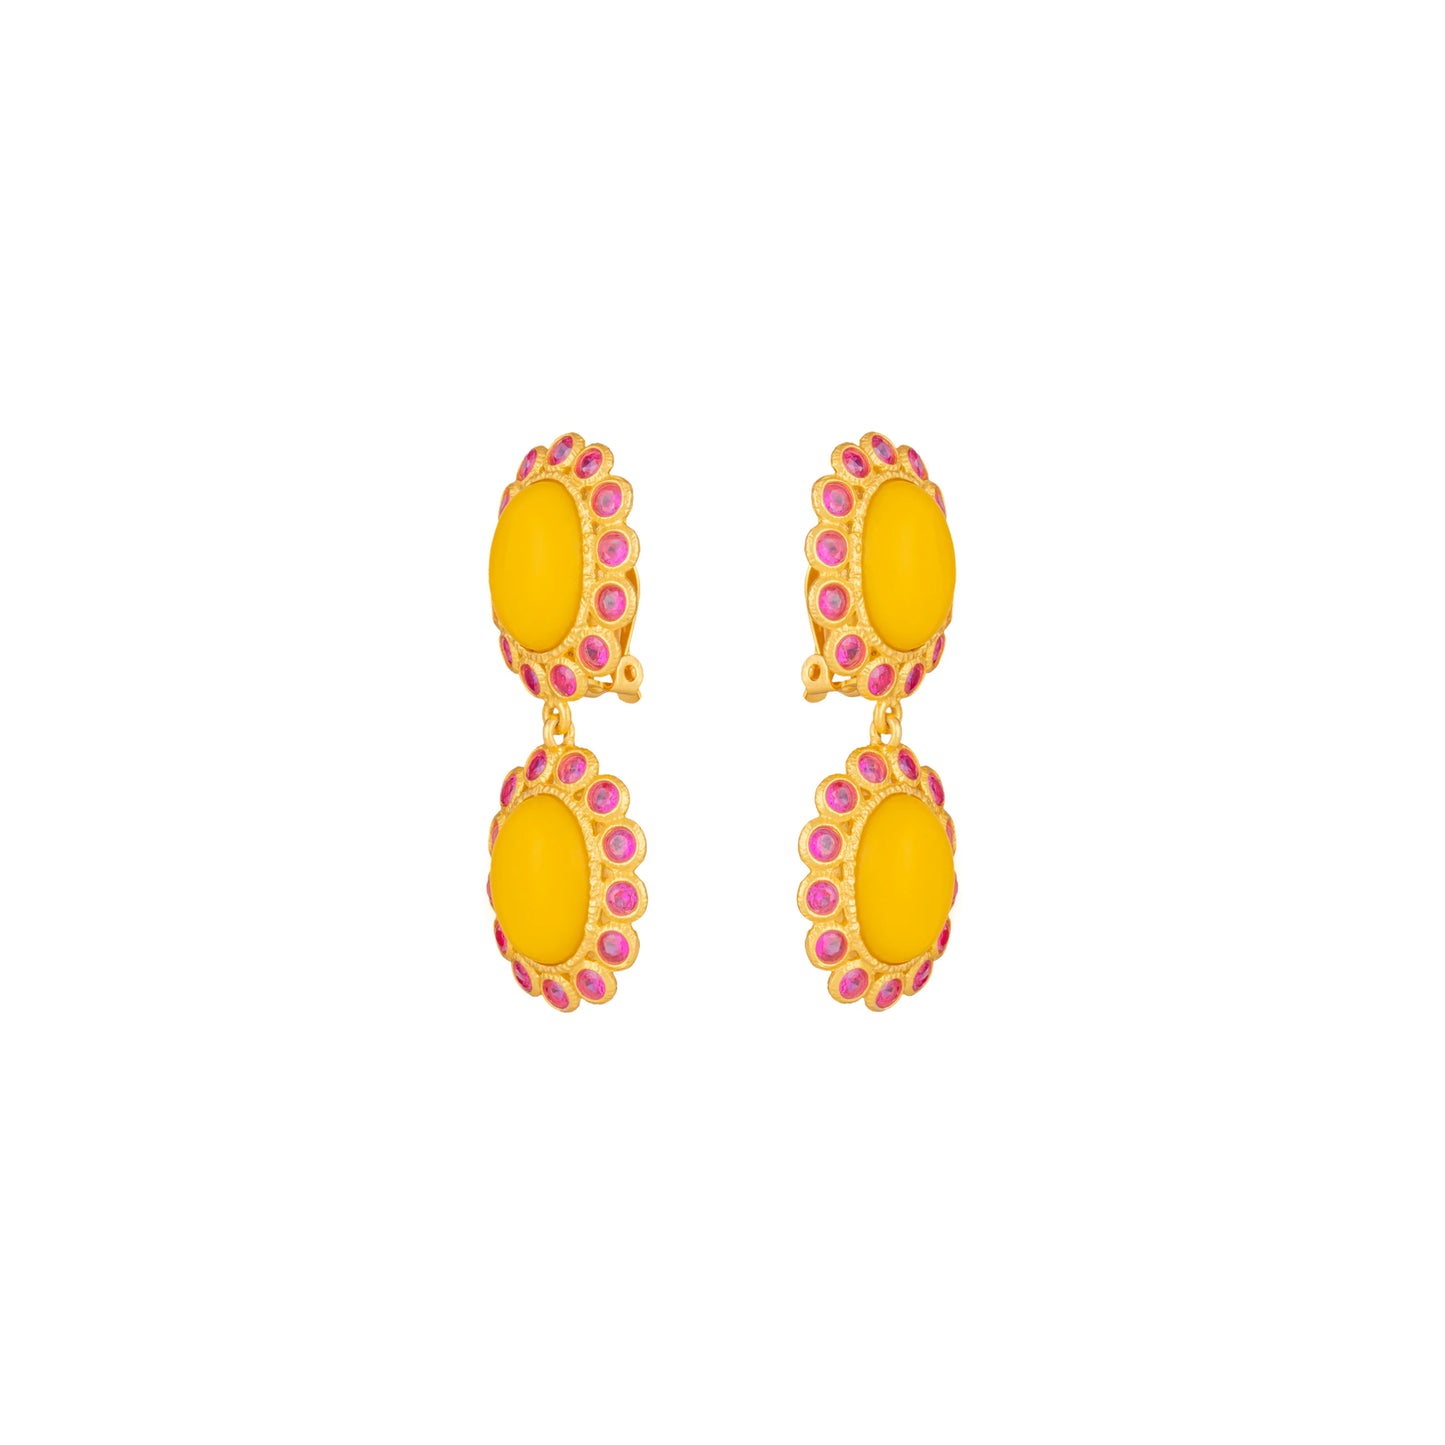 Ada Earrings Yellow and Pink Crystal